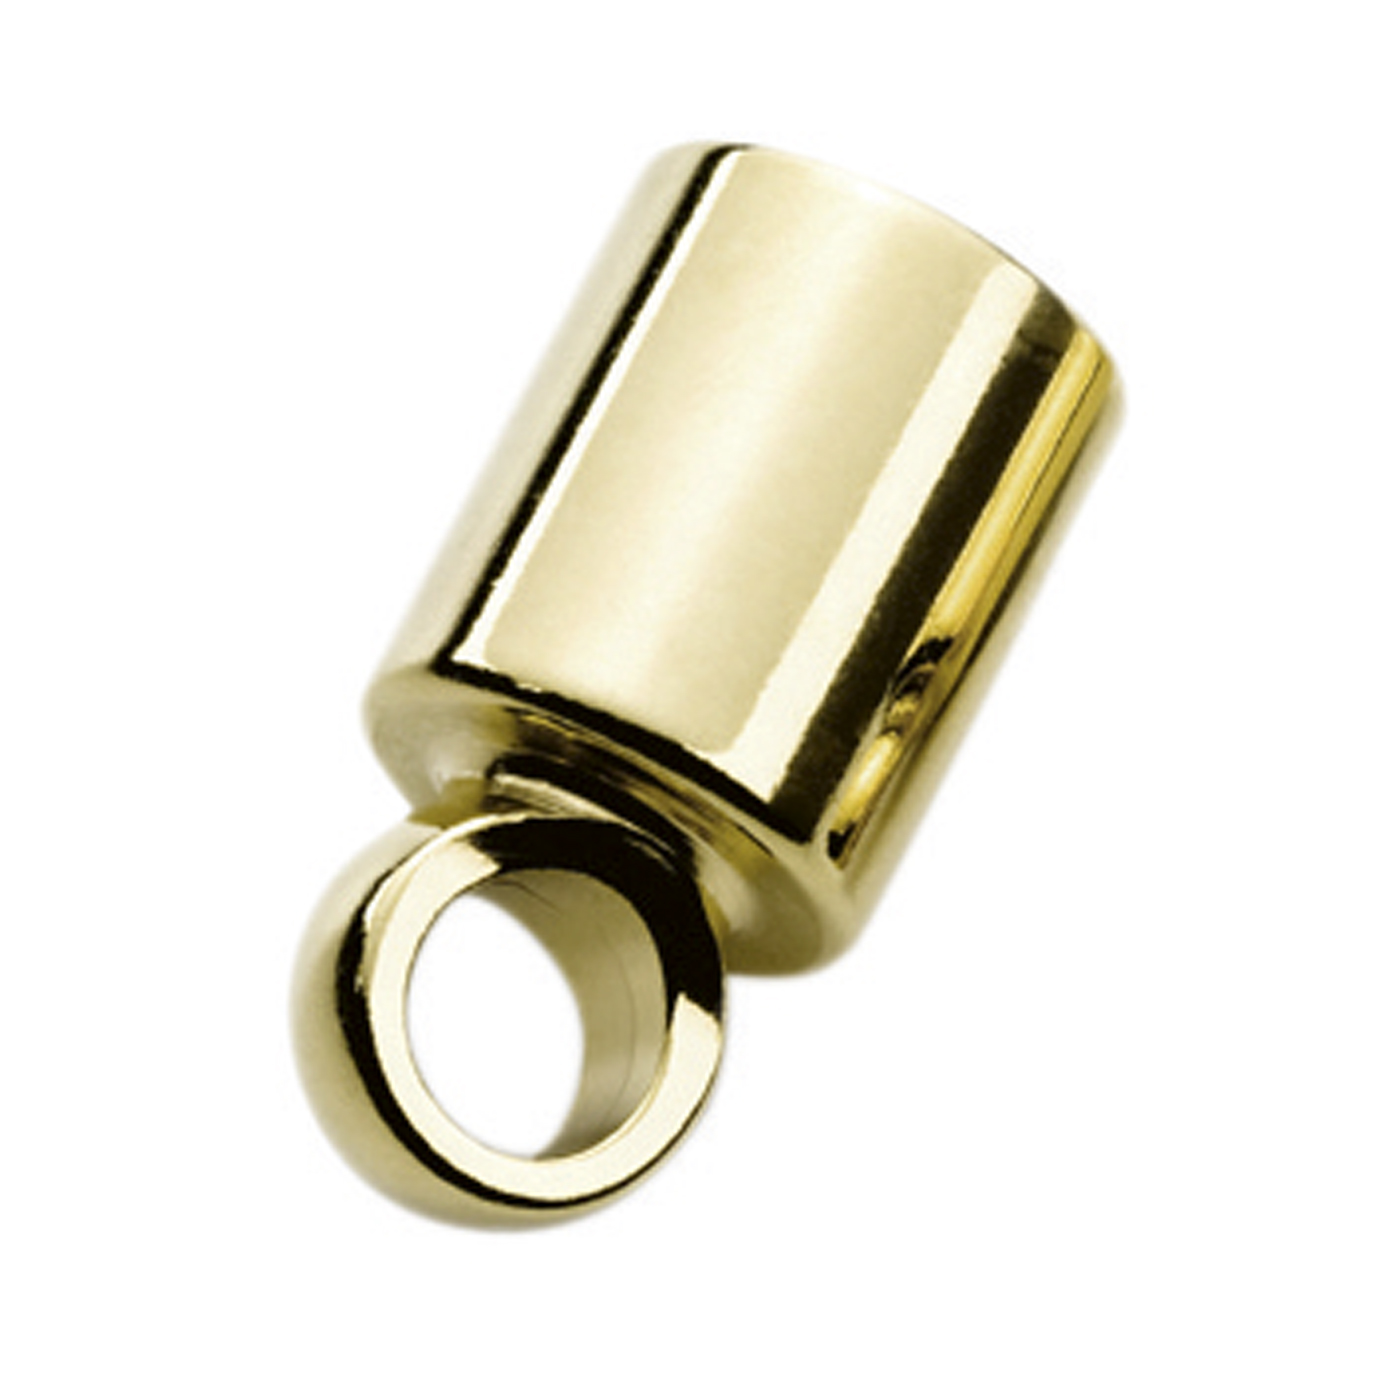 Designer-Endkapsel, 925 Ag vergoldet, Zylinder, ø 8 mm - 1 Stück